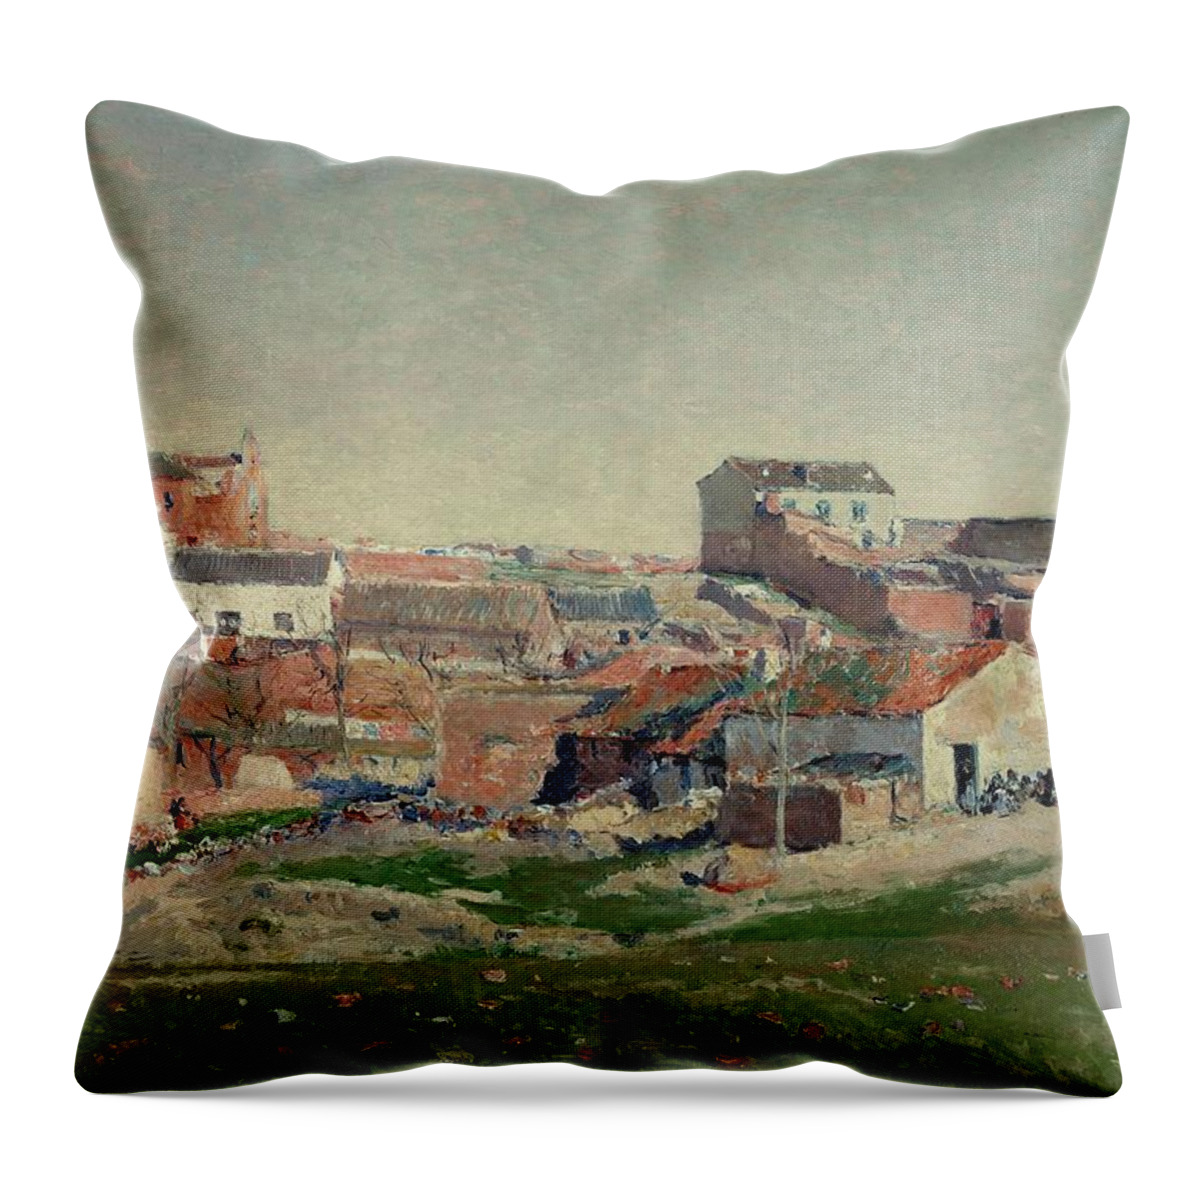 Aureliano De Beruete Throw Pillow featuring the painting Aureliano de Beruete y Moret / 'The Outskirts of Madrid -the Neighborhood of Bellas Vistas-', 1906. by Aureliano de Beruete -1845-1912-